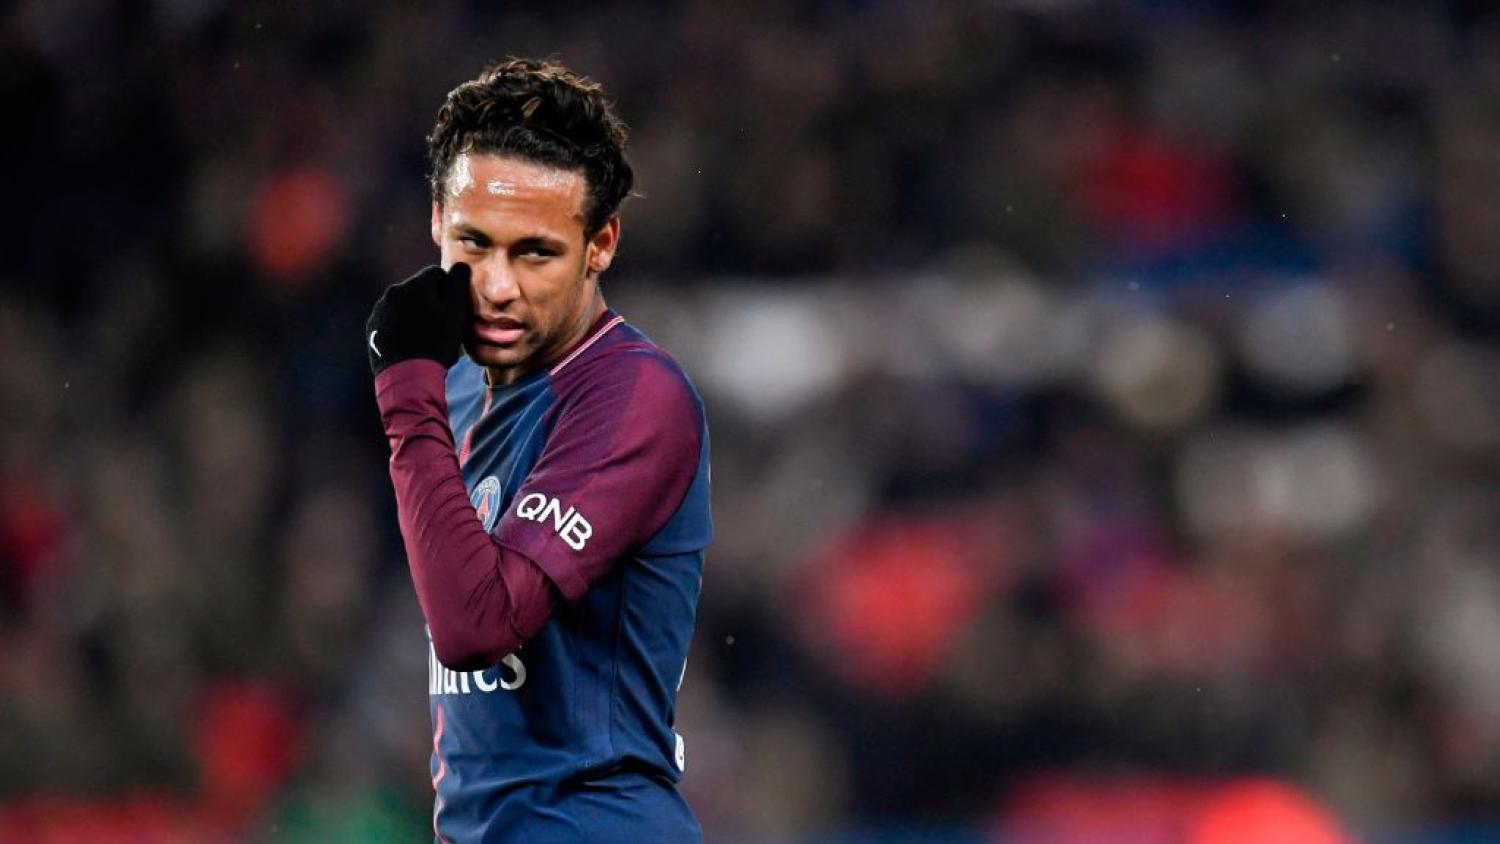 Neymar PSG Highlights vs Dijon Spoiled By Jeers